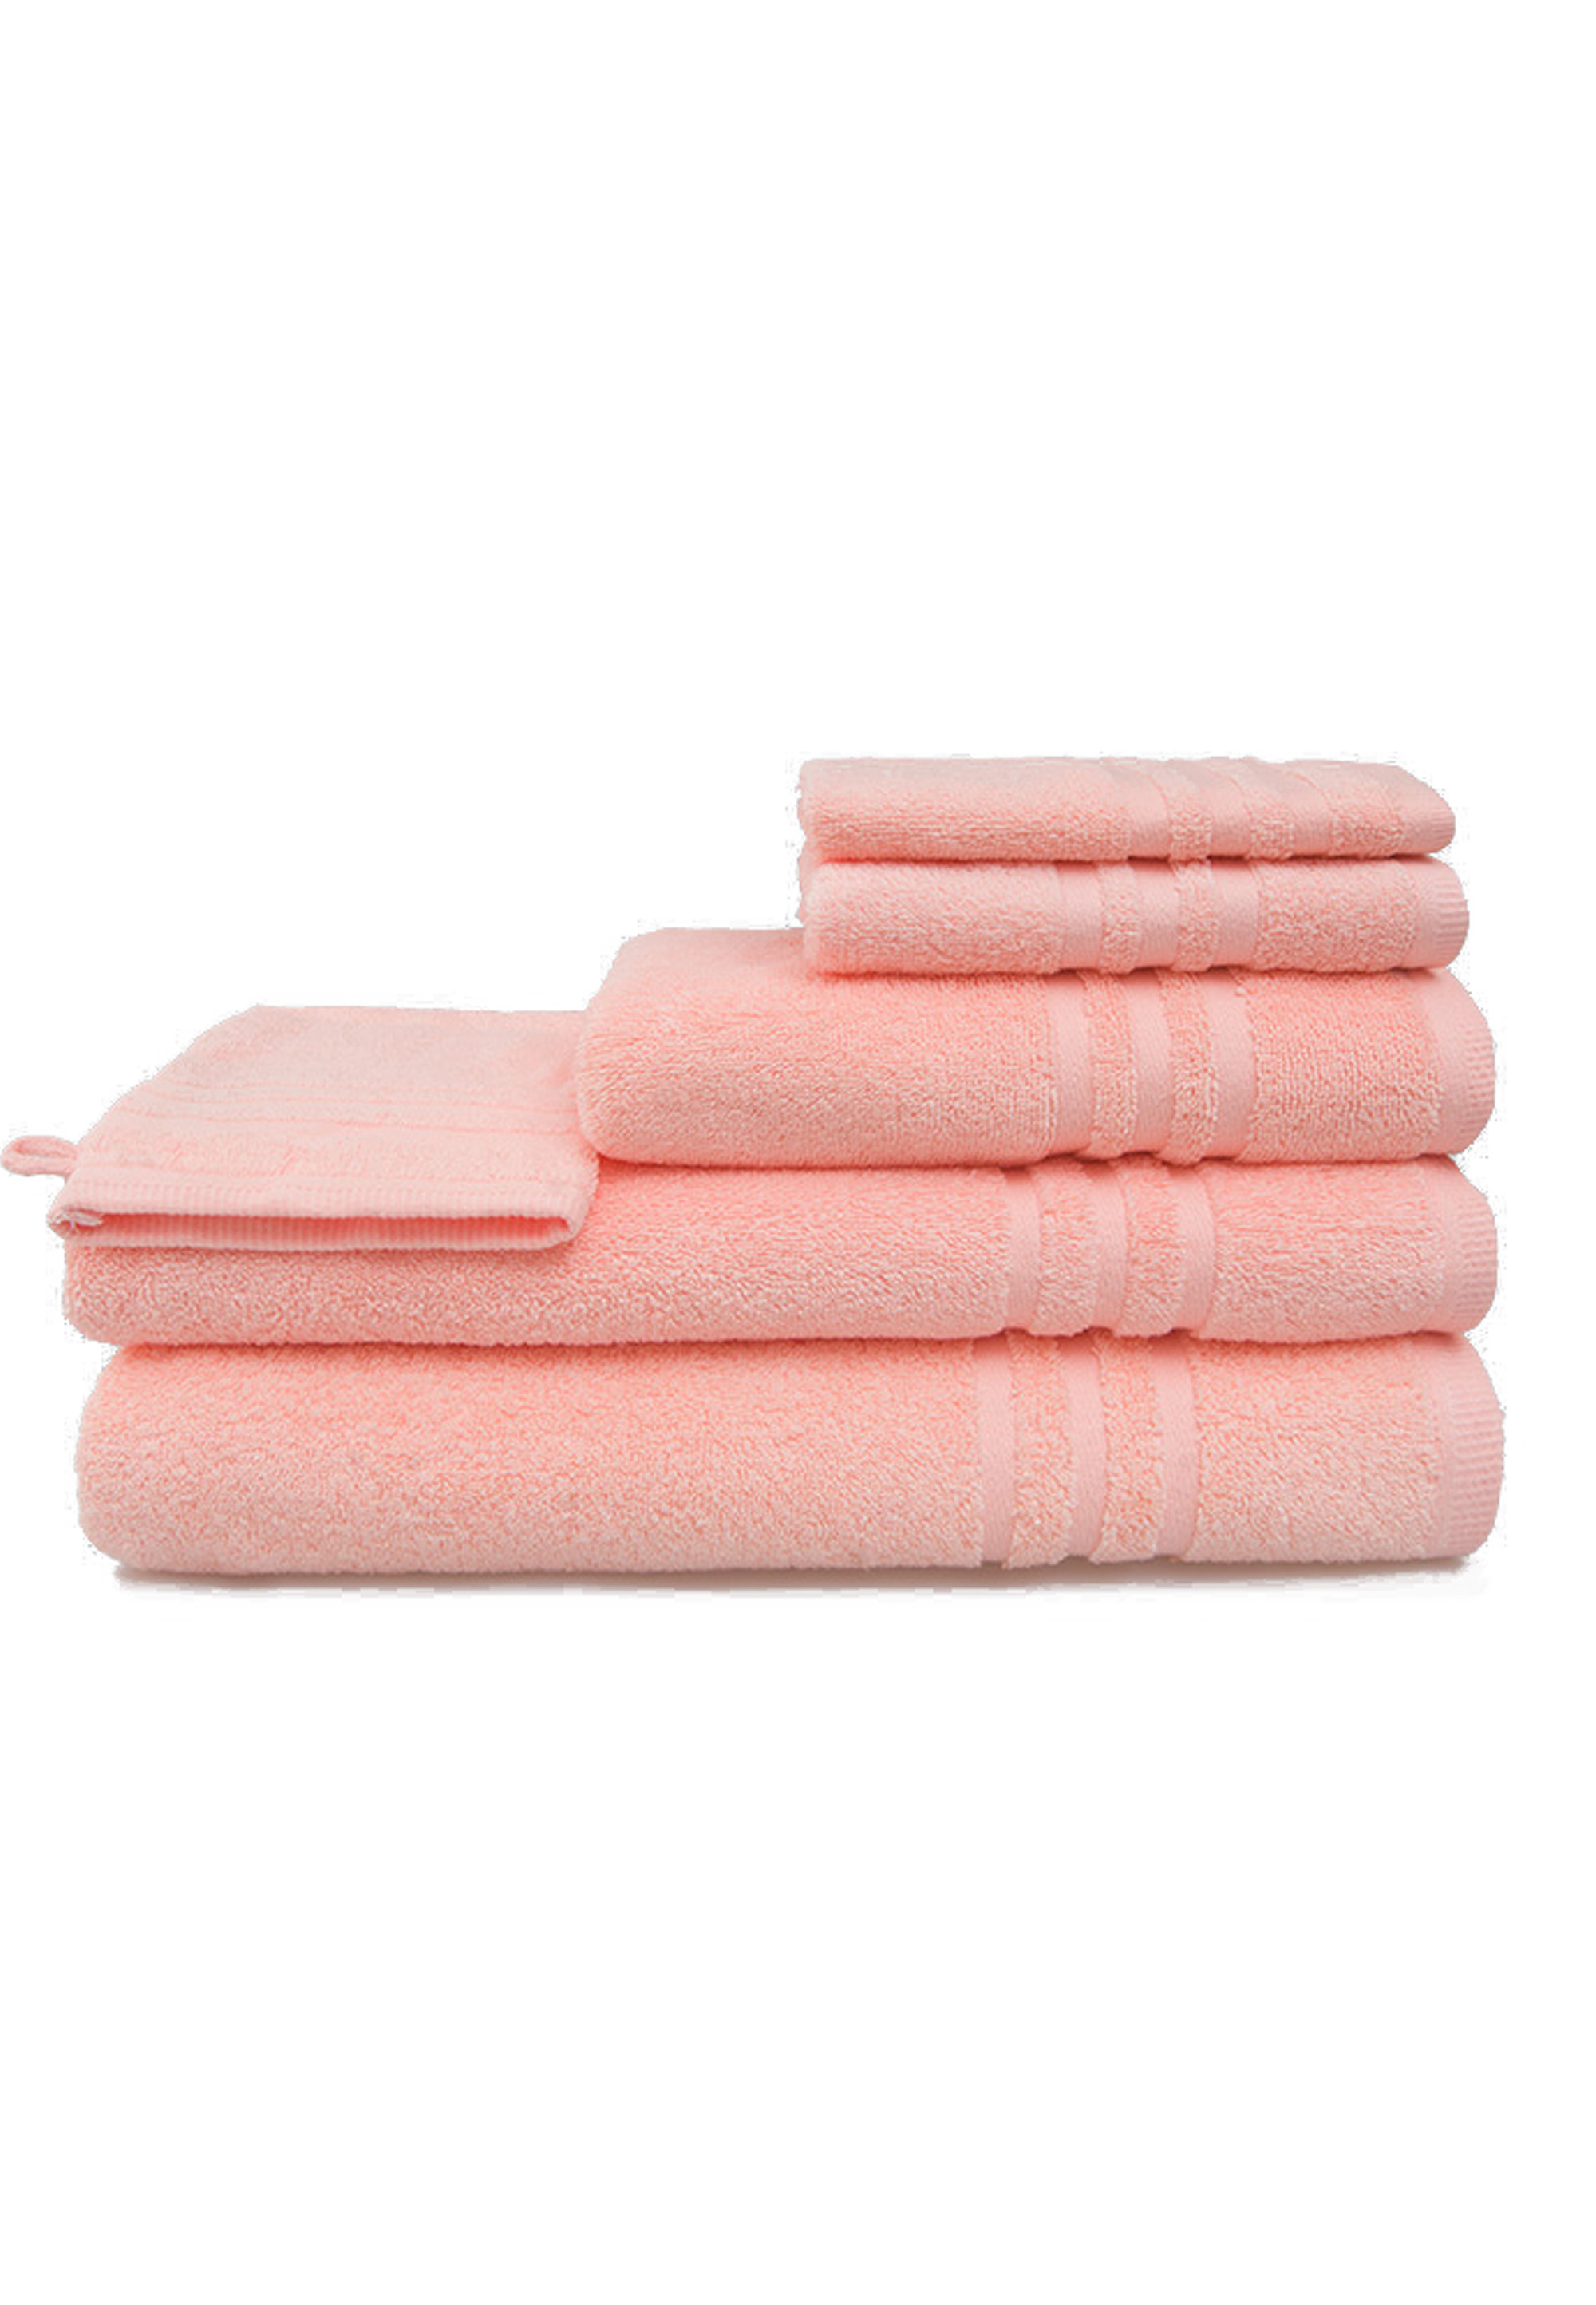 Полотенце для ванной Grace Grand Spa Aktion, розовый полотенце для ванной grace grand spa aktion цвет apricot